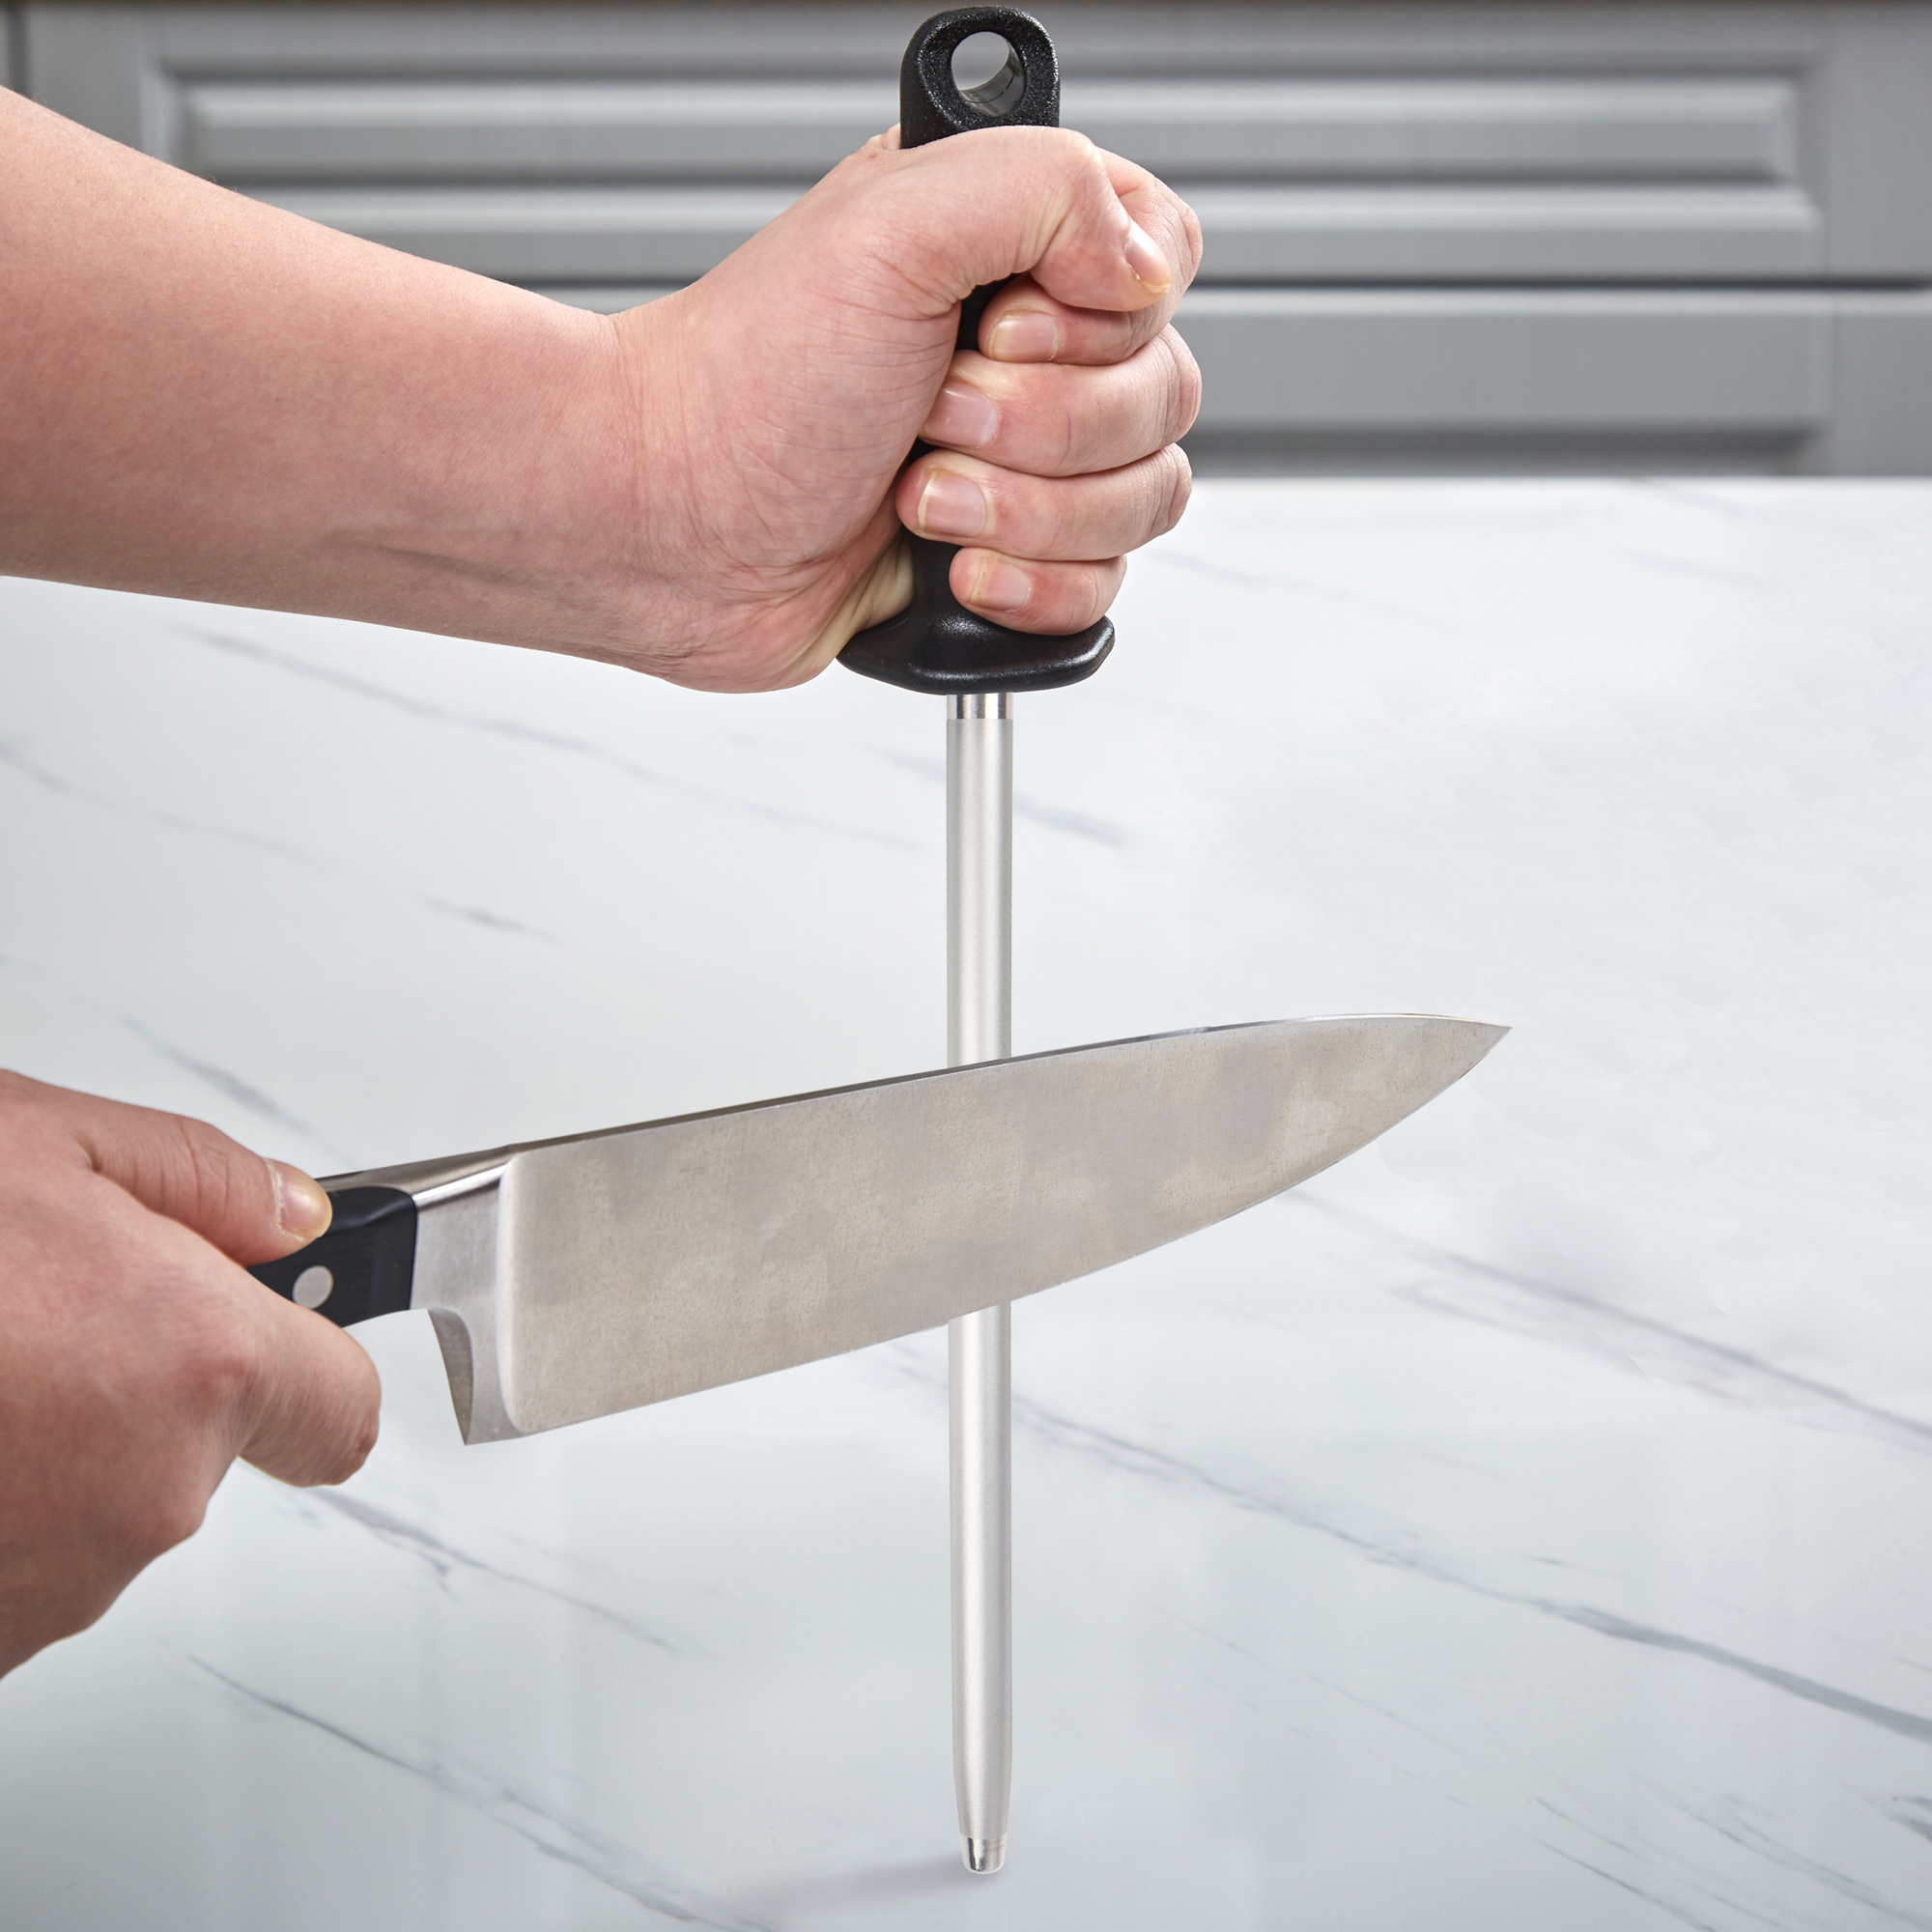 All-In-1 Knife, Pruner, Axe & Tool Sharpener - Sharpal Inc.